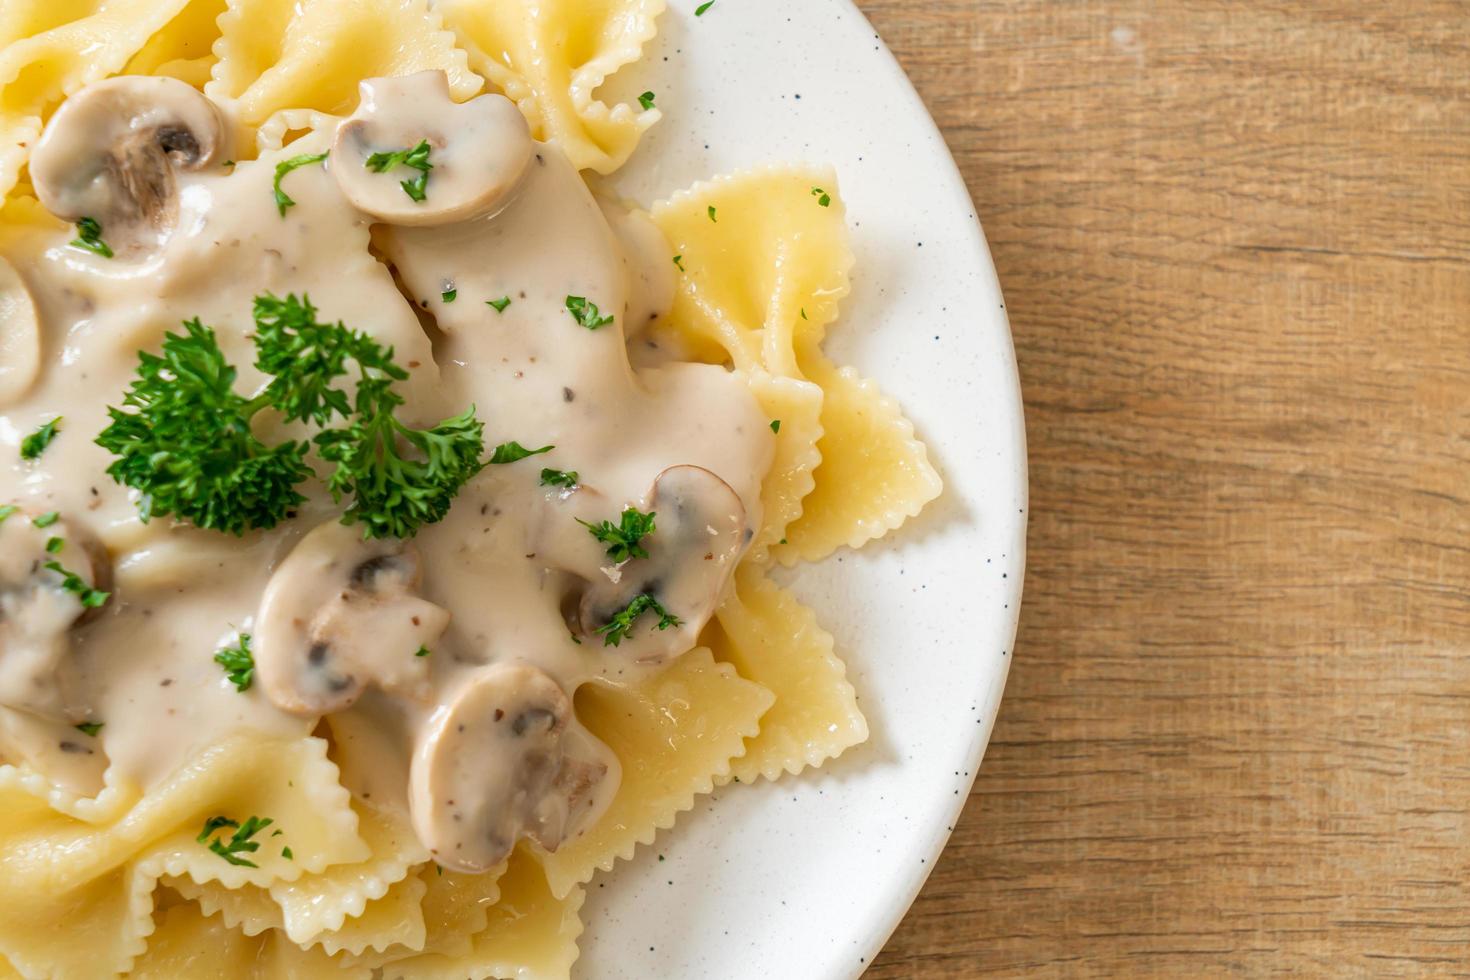 Farfalle pasta with mushroom white cream sauce - Italian food style photo